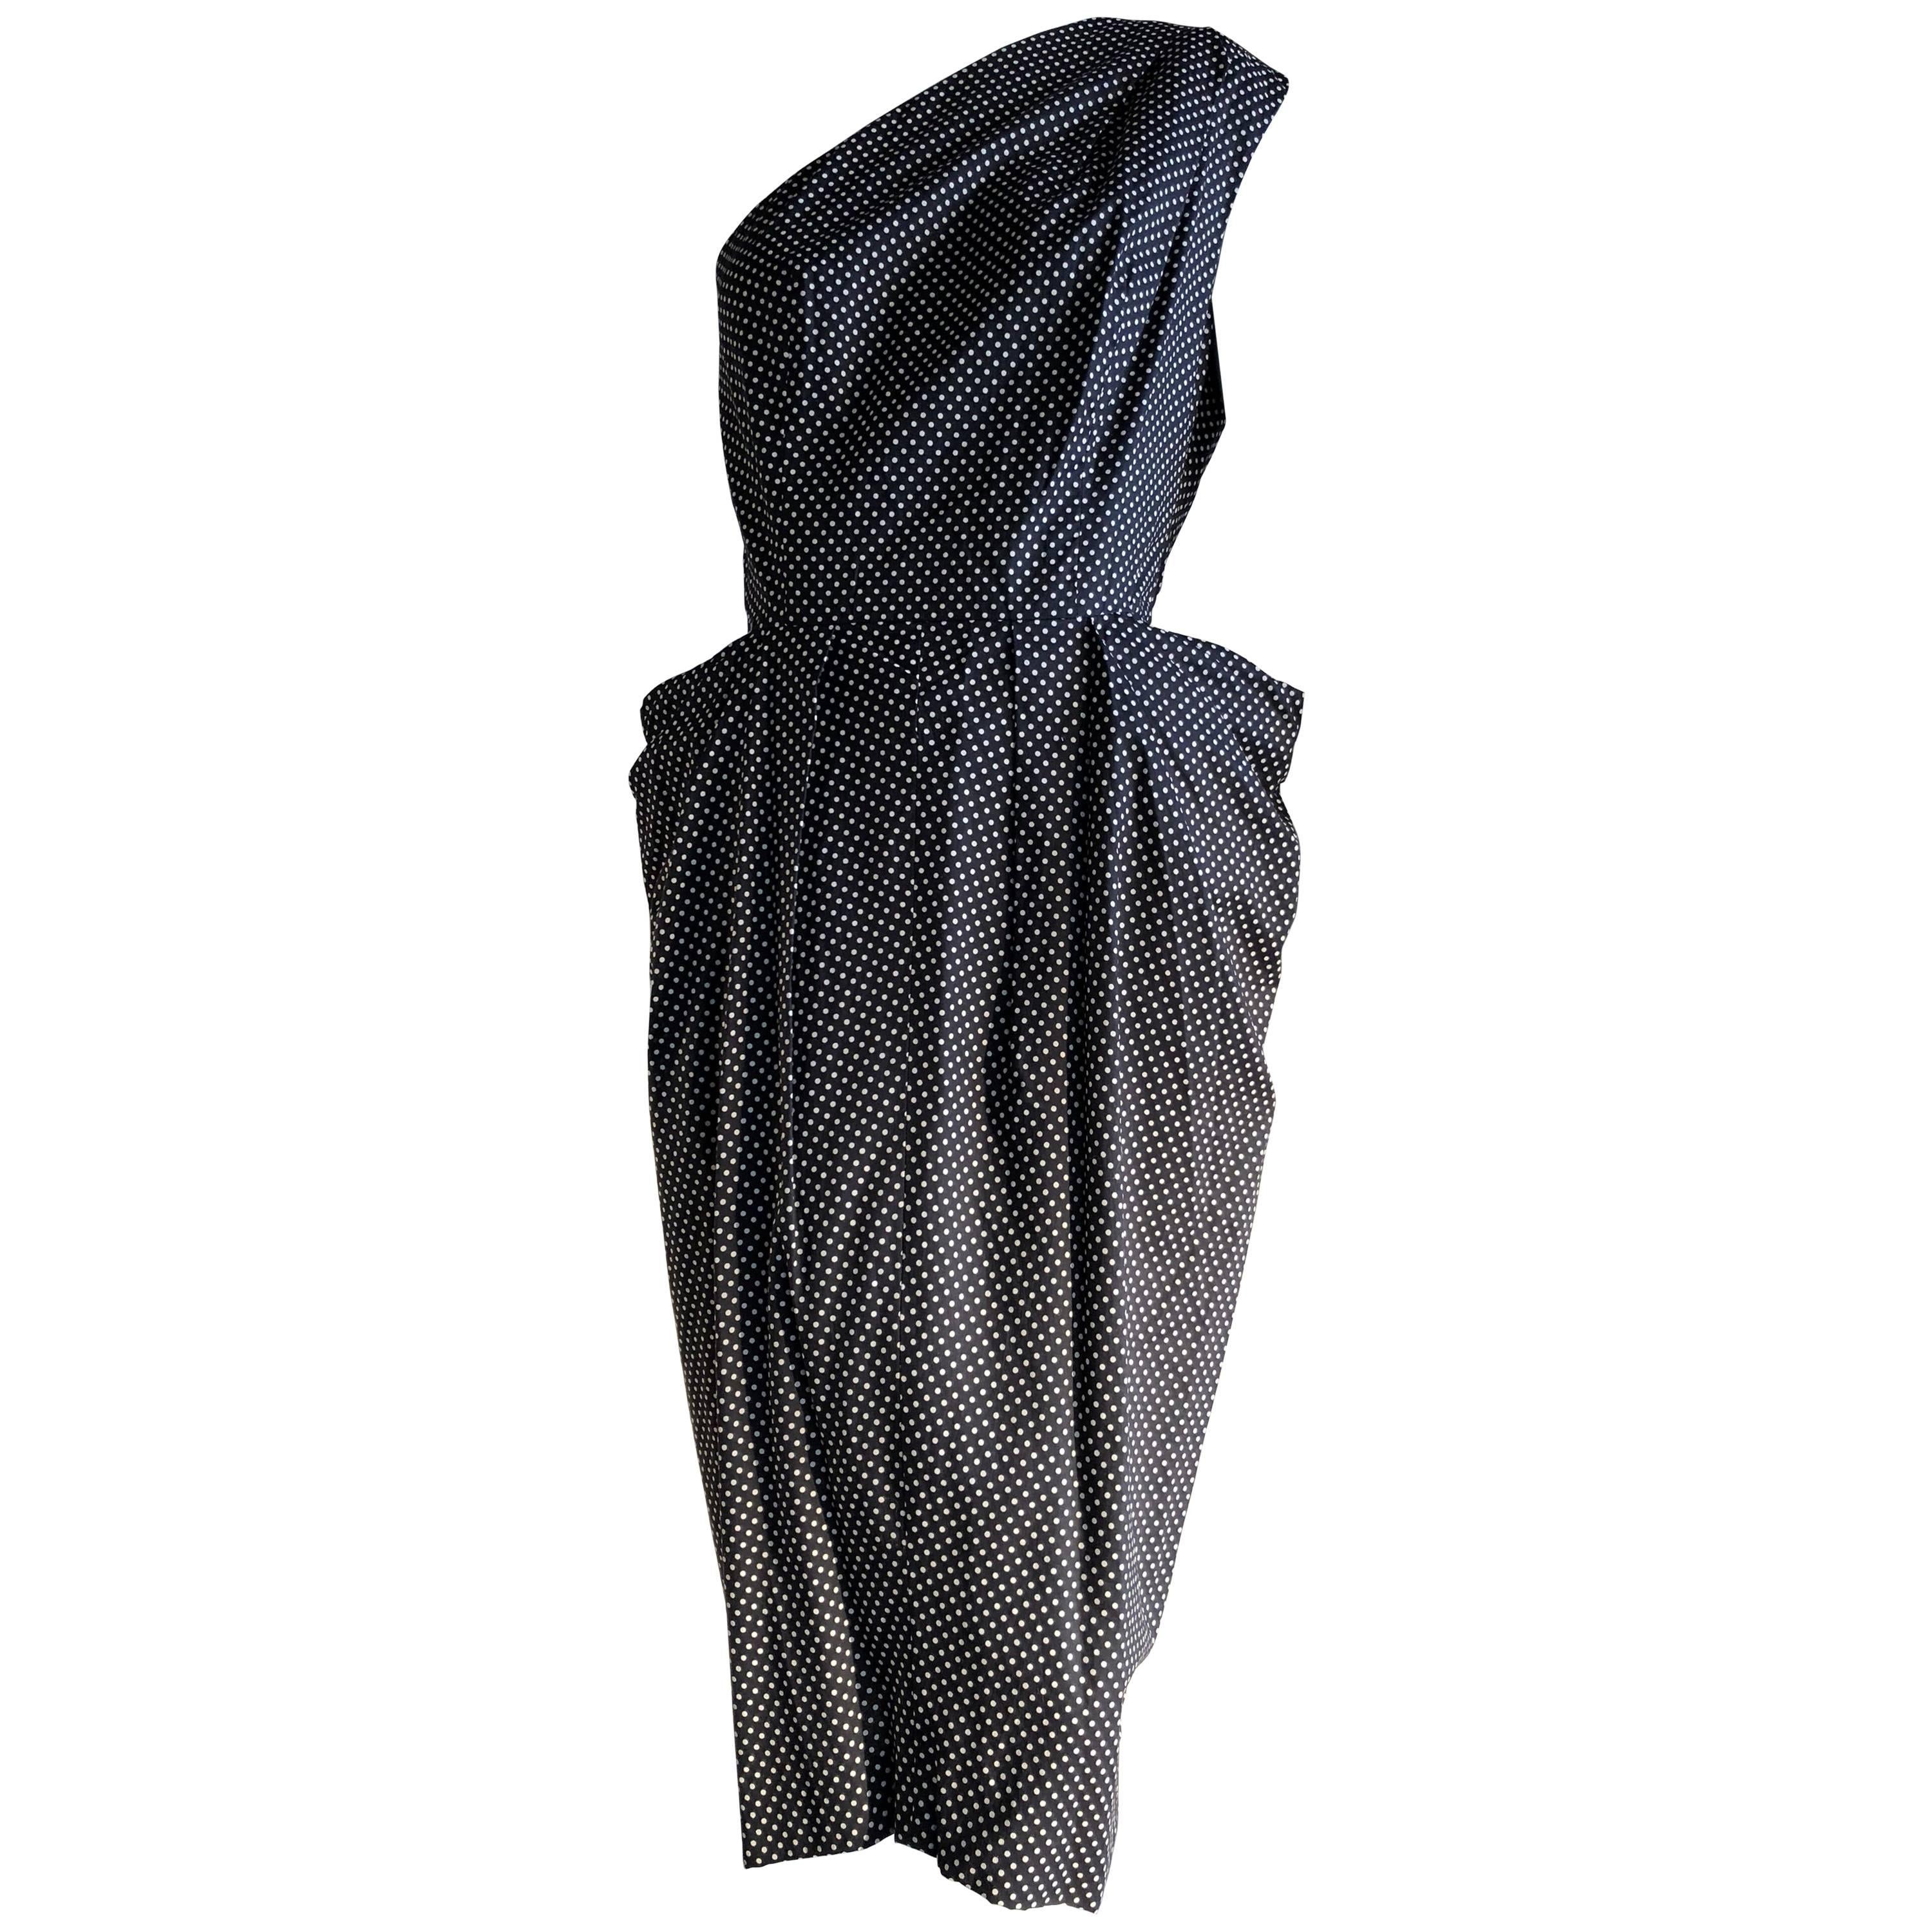 1980s Custom-Made Black and White Polka Dot One-Shoulder Dress W/ Hip Drapes